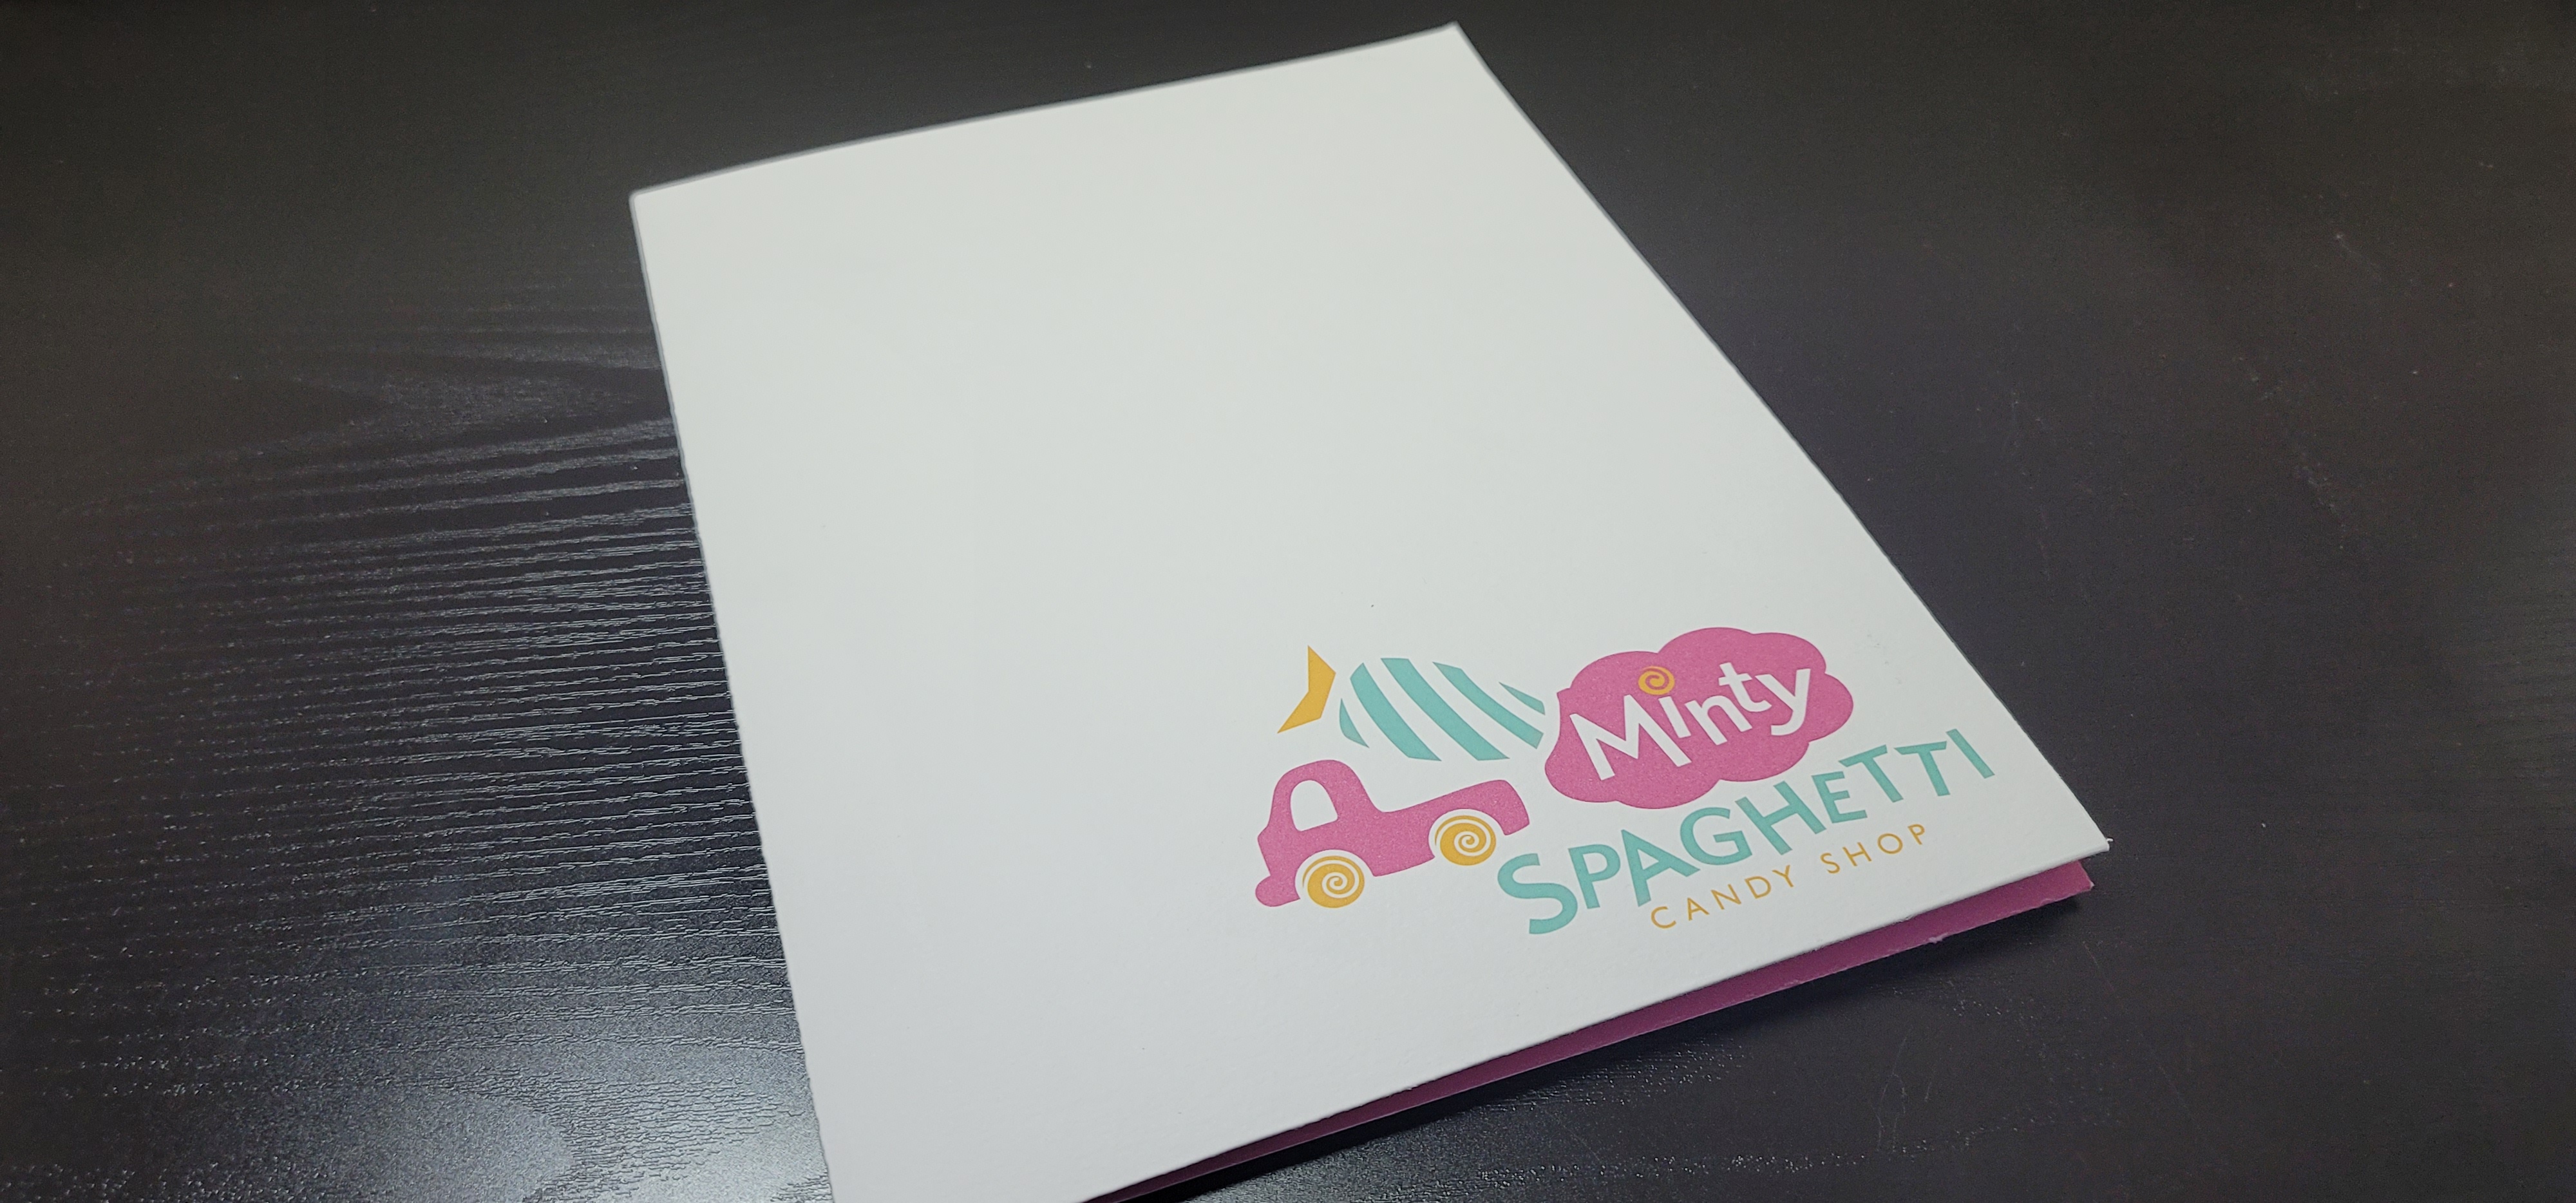 Folder for Minty Spaghetti Candy Shop